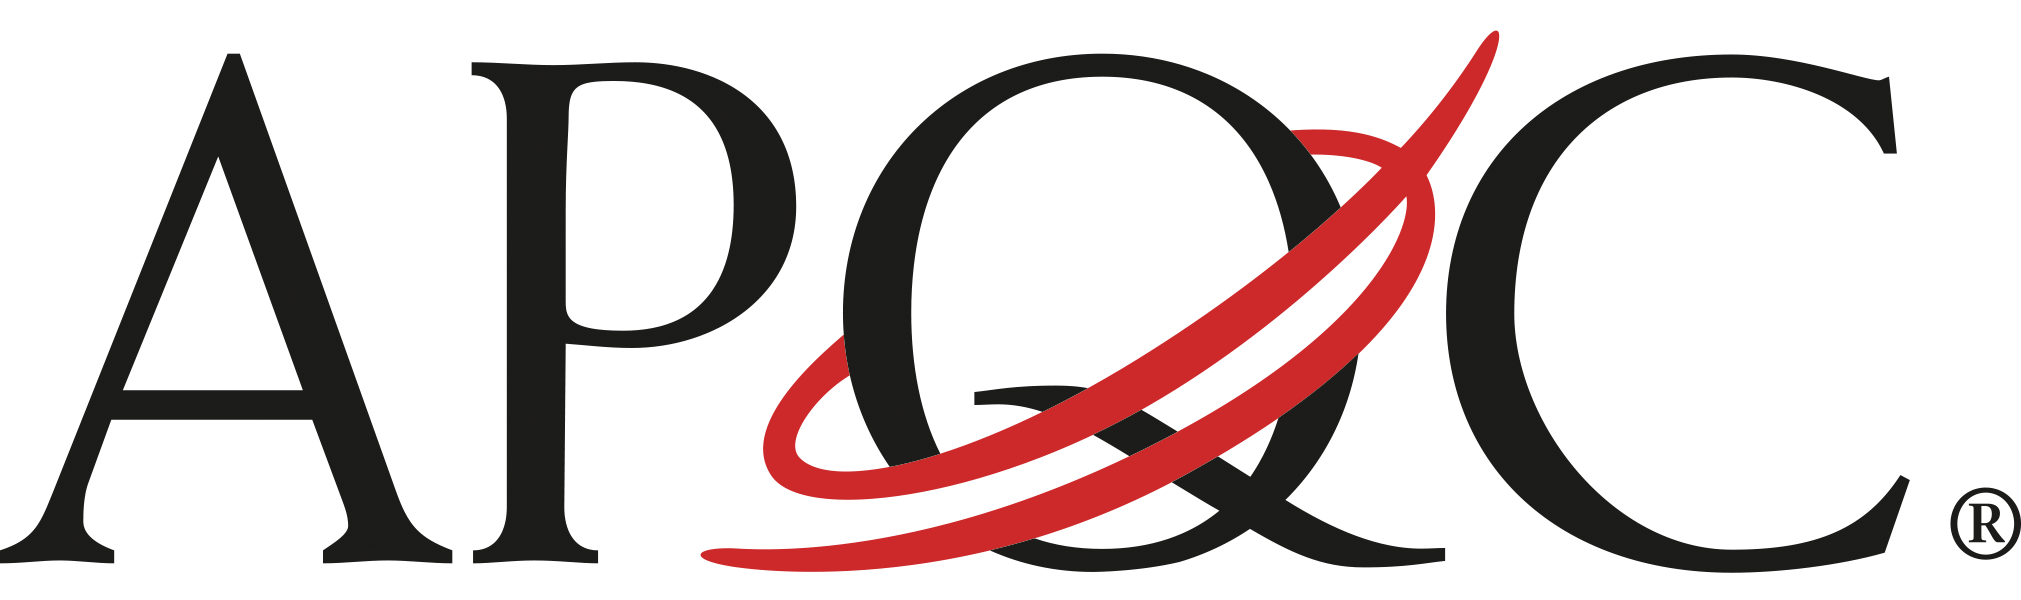 GEN-APQC Logo-Full Color.png